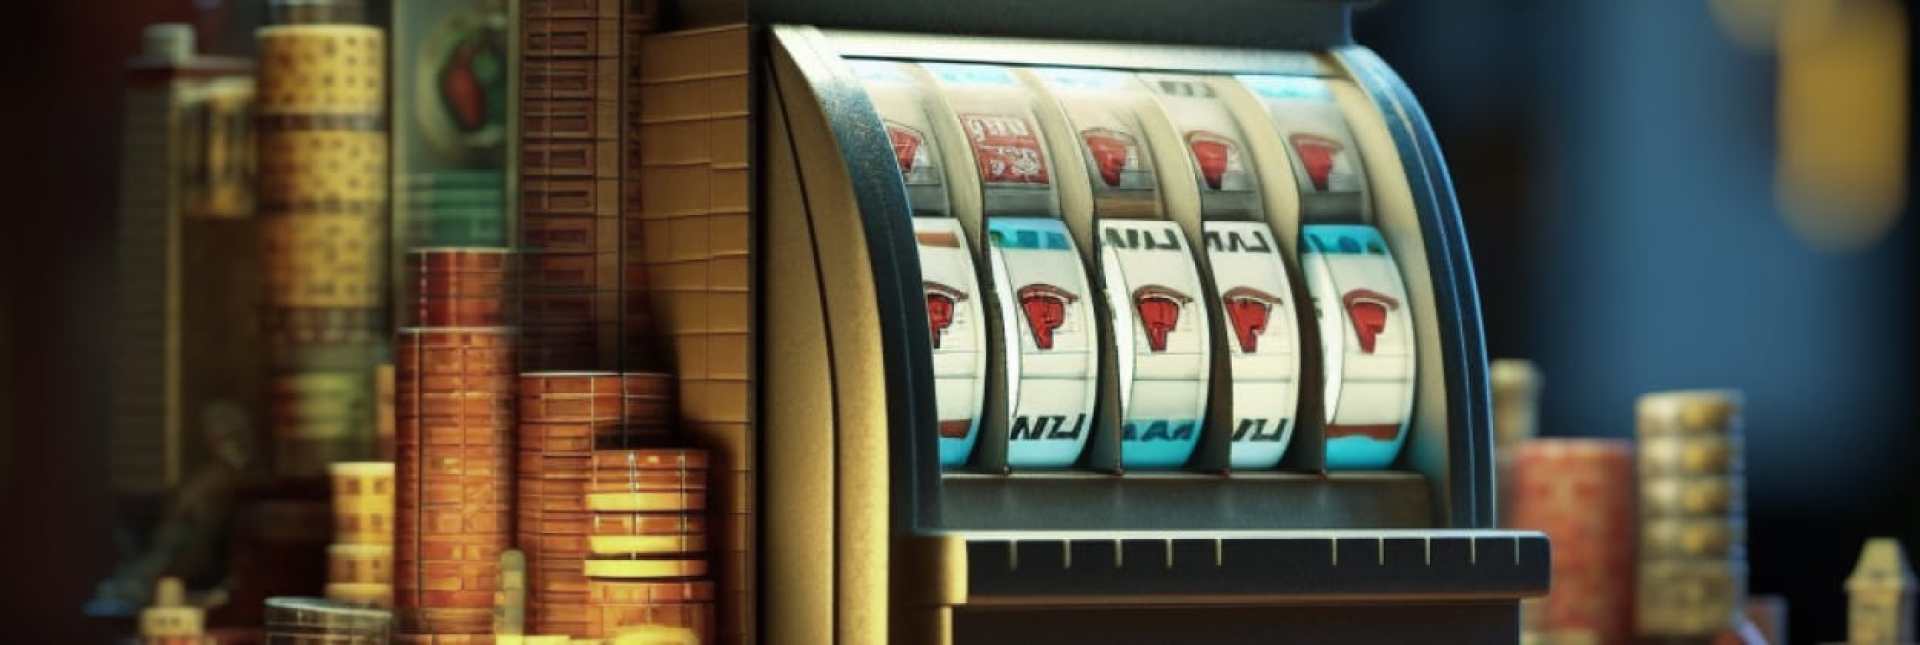 Free spins on slots at litecoin online casinos